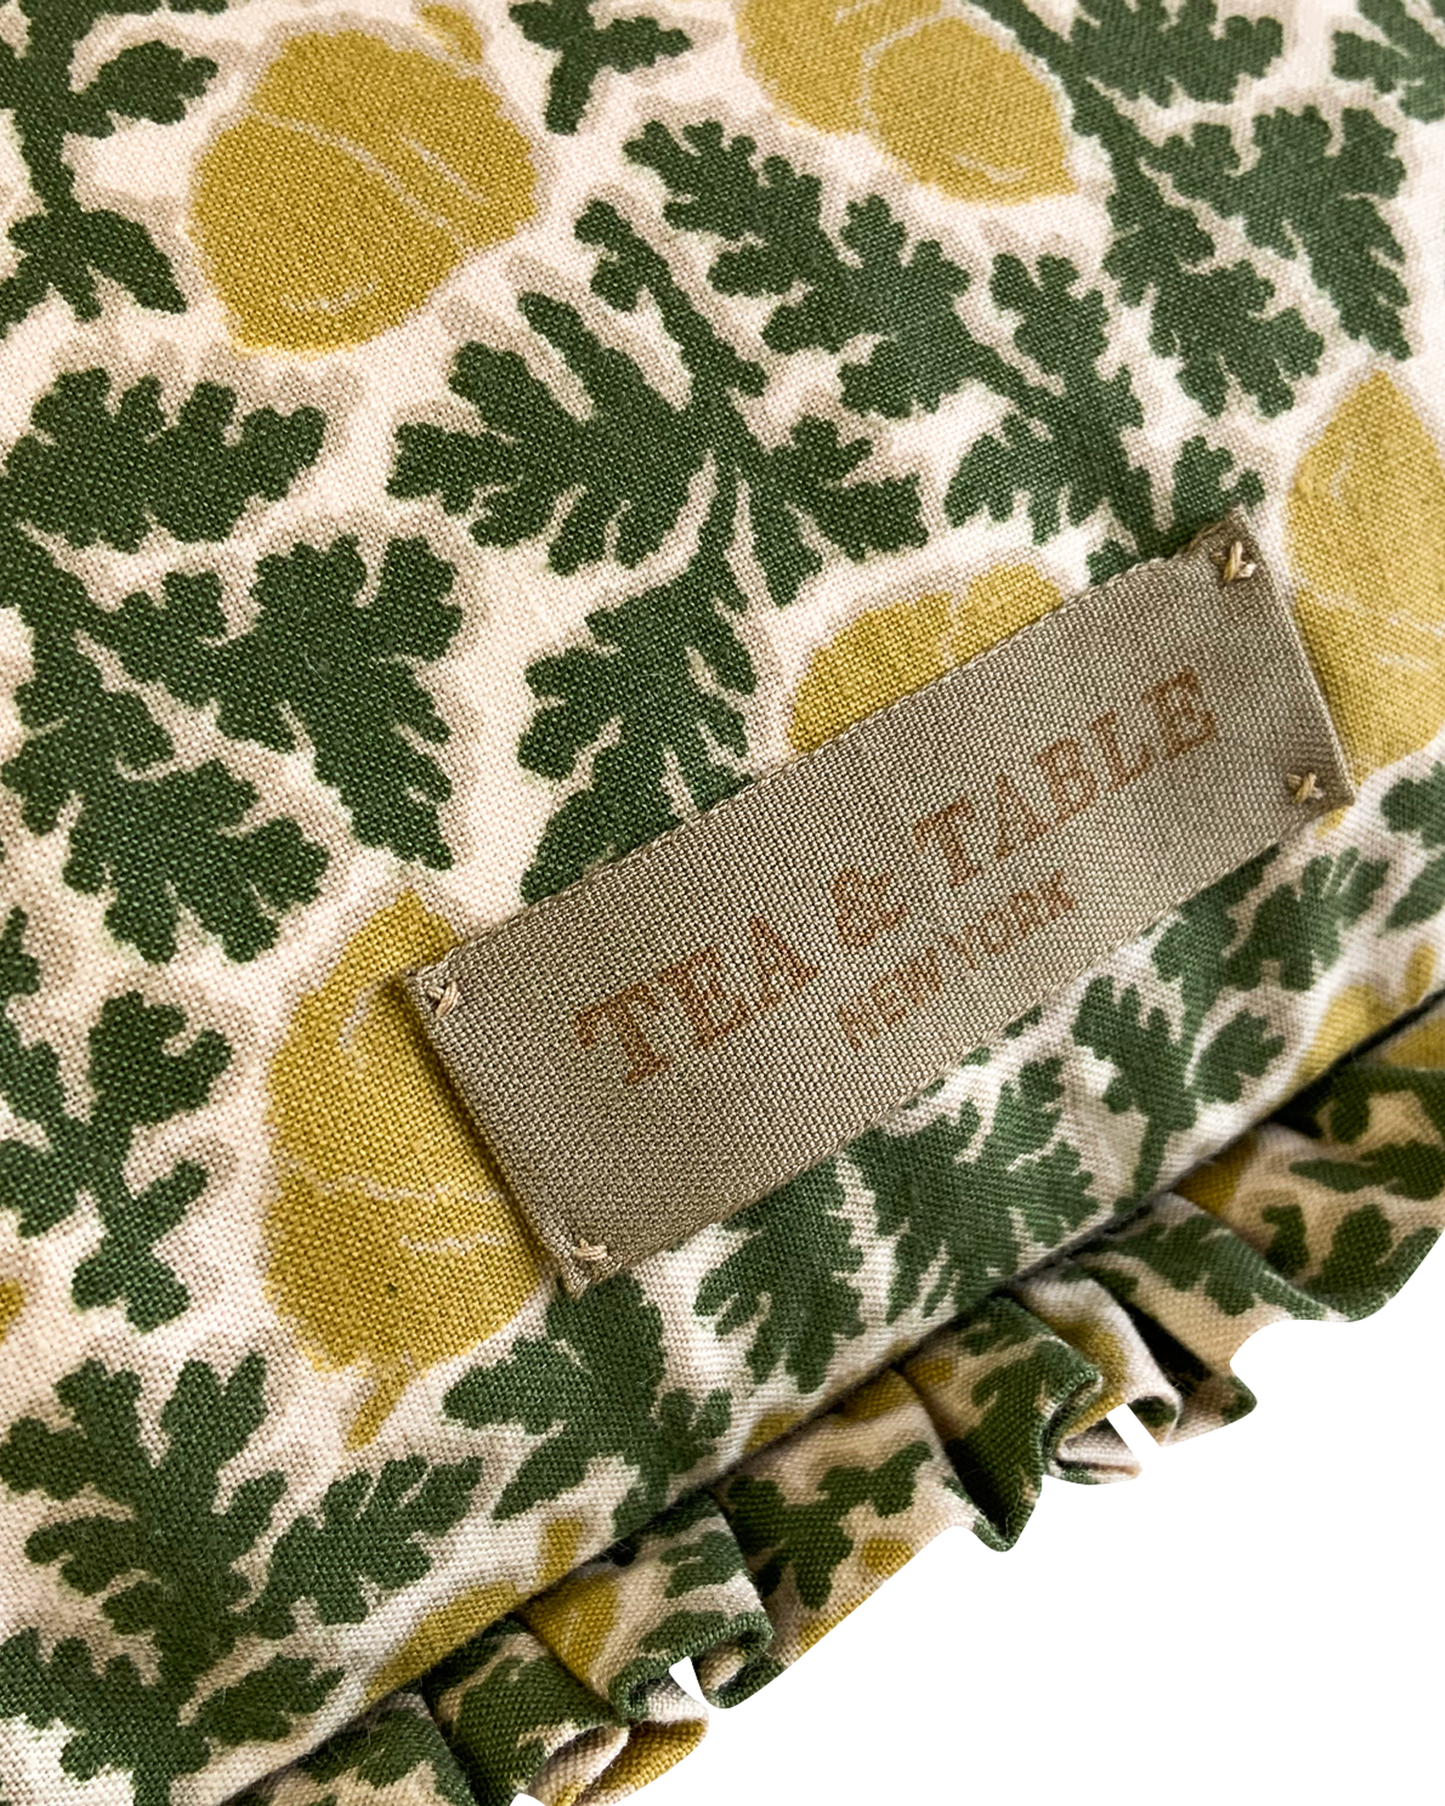 Cushion in “Acorn” Print with Ruffles in green/mustard